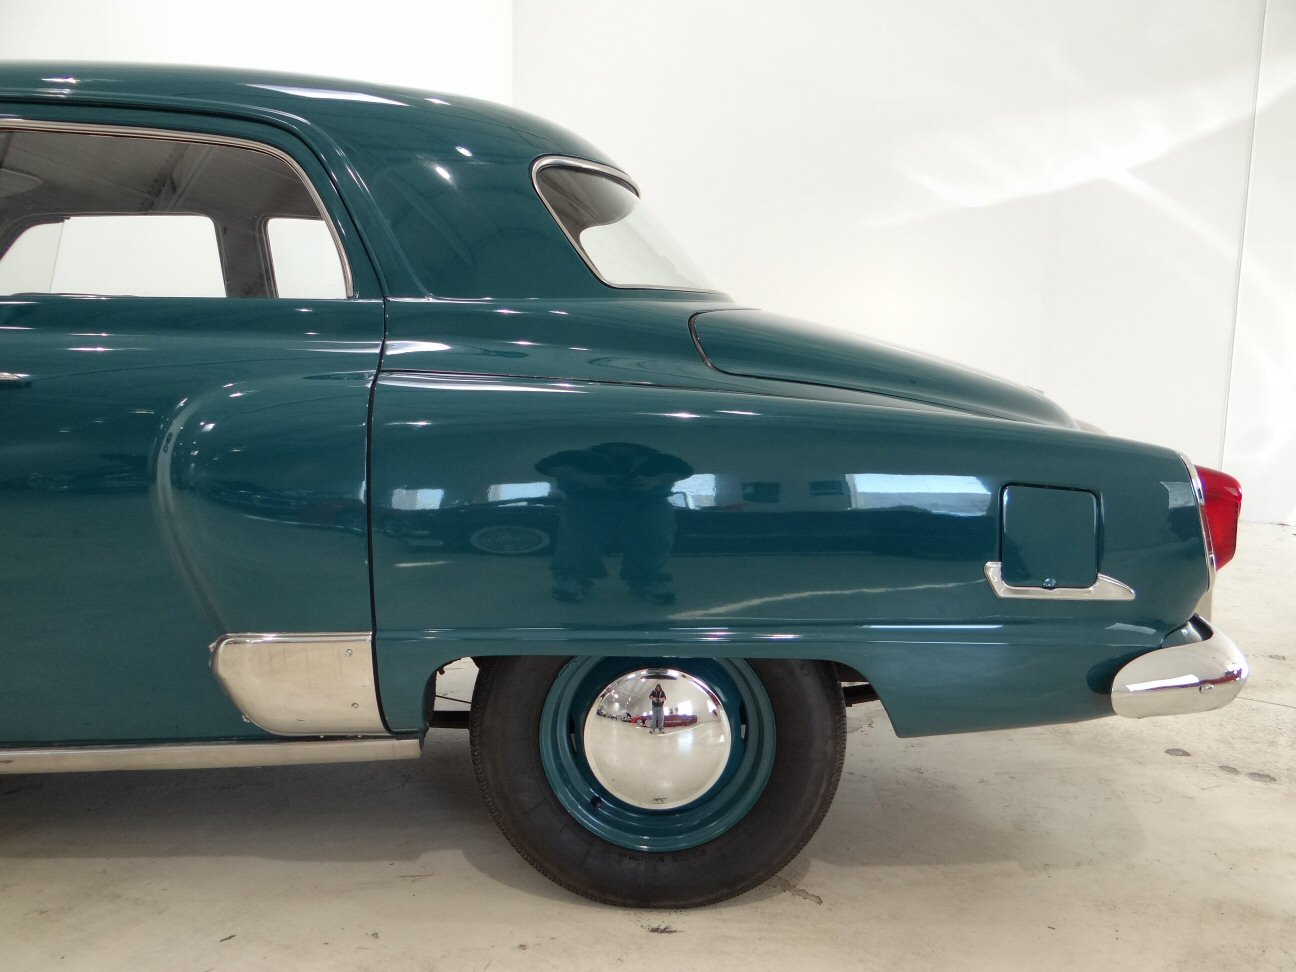 1951 Studebaker Commander for Sale - Gateway Classic Cars